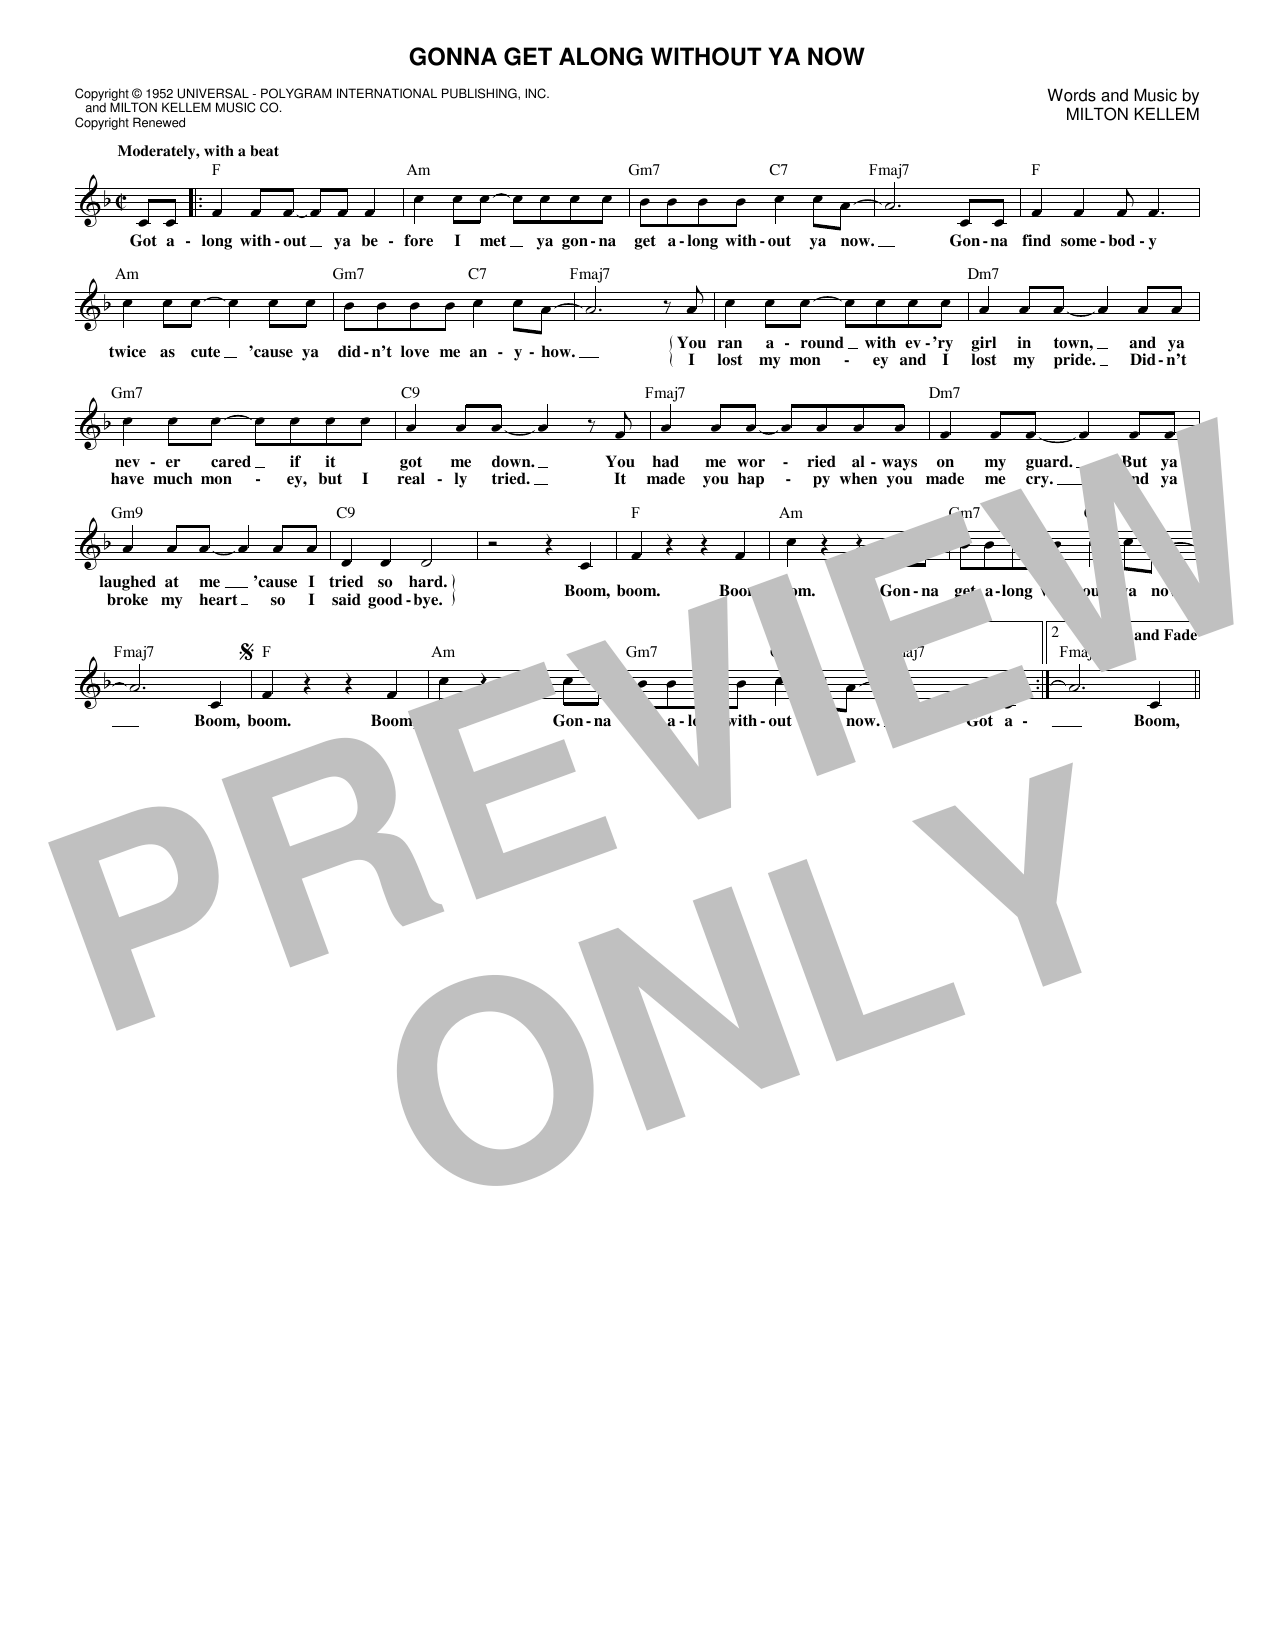 Skeeter Davis Gonna Get Along Without Ya Now Sheet Music Notes & Chords for Melody Line, Lyrics & Chords - Download or Print PDF